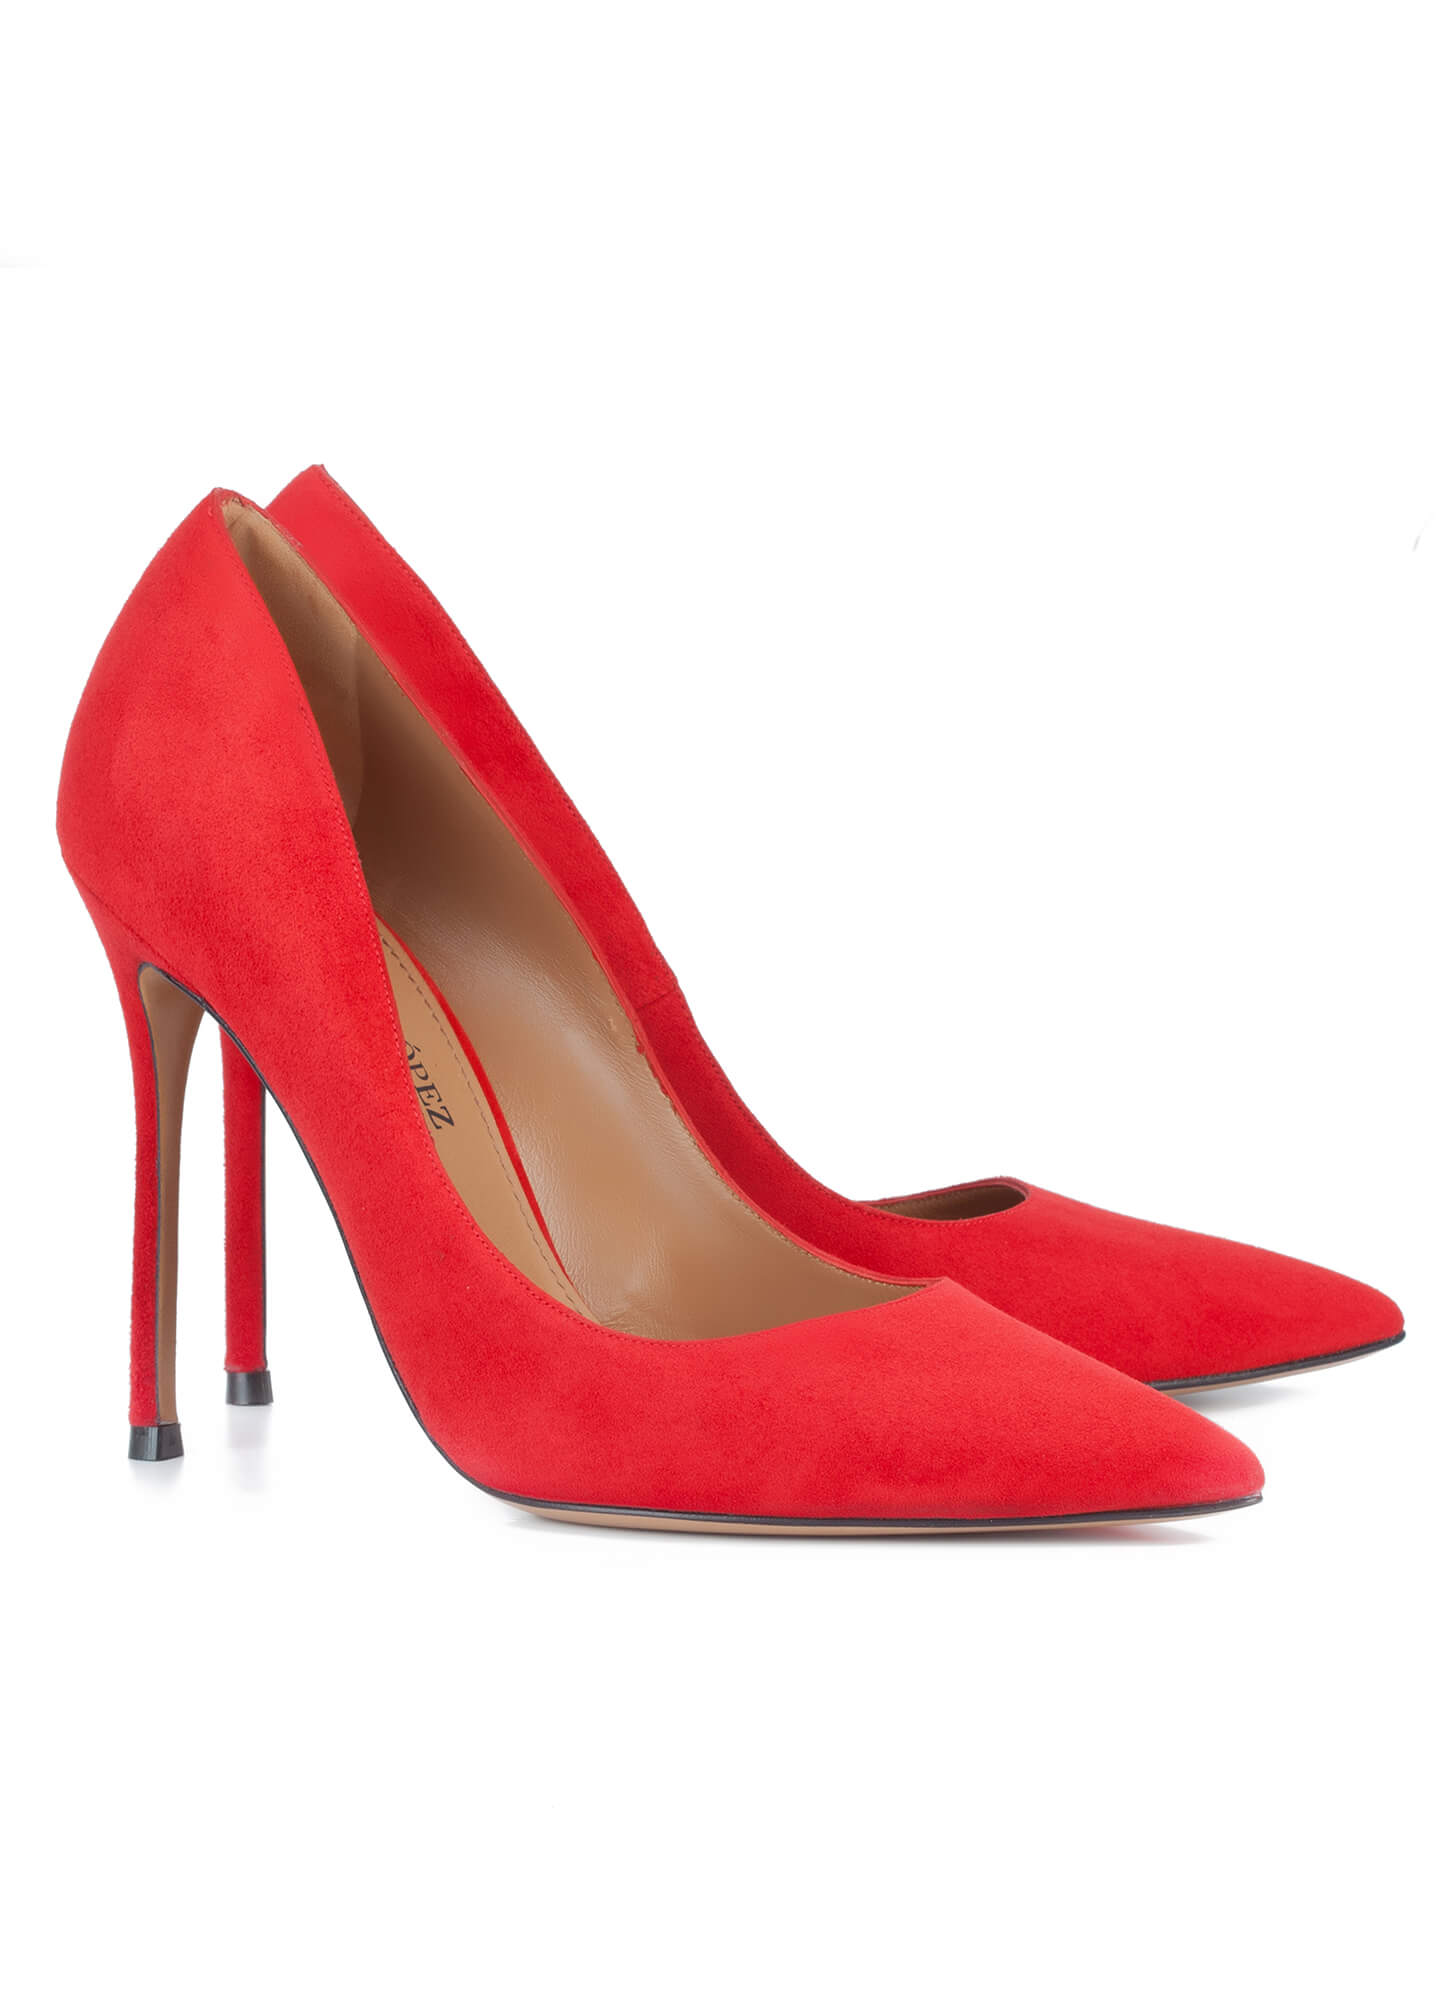 Red suede point-toe stiletto heel pumps . PURA LOPEZ